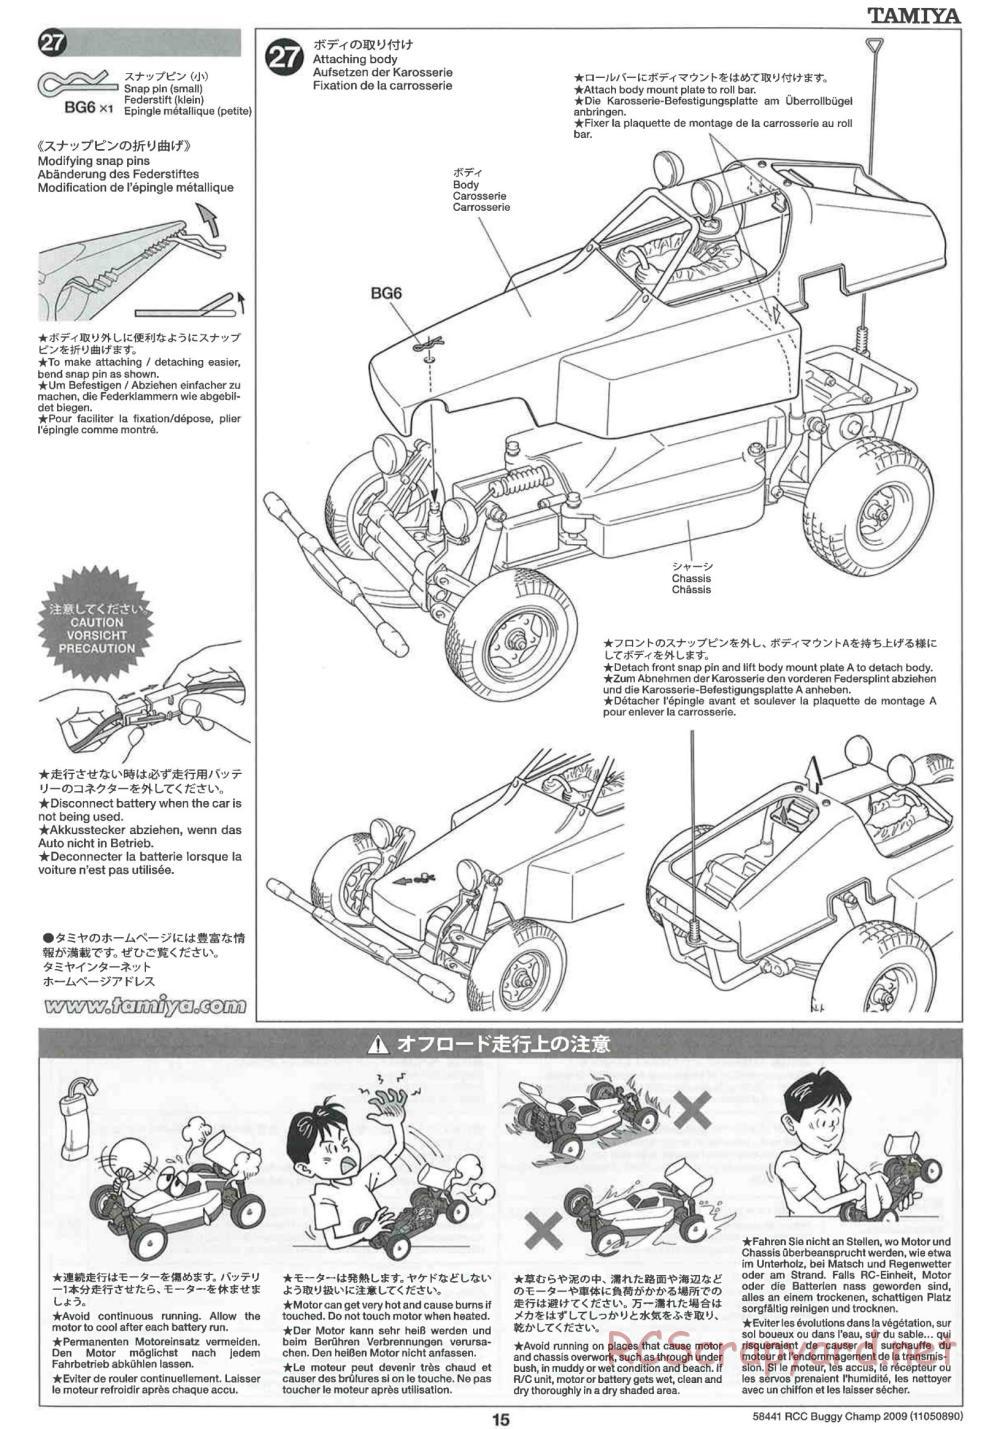 Tamiya - Buggy Champ Chassis - Manual - Page 15